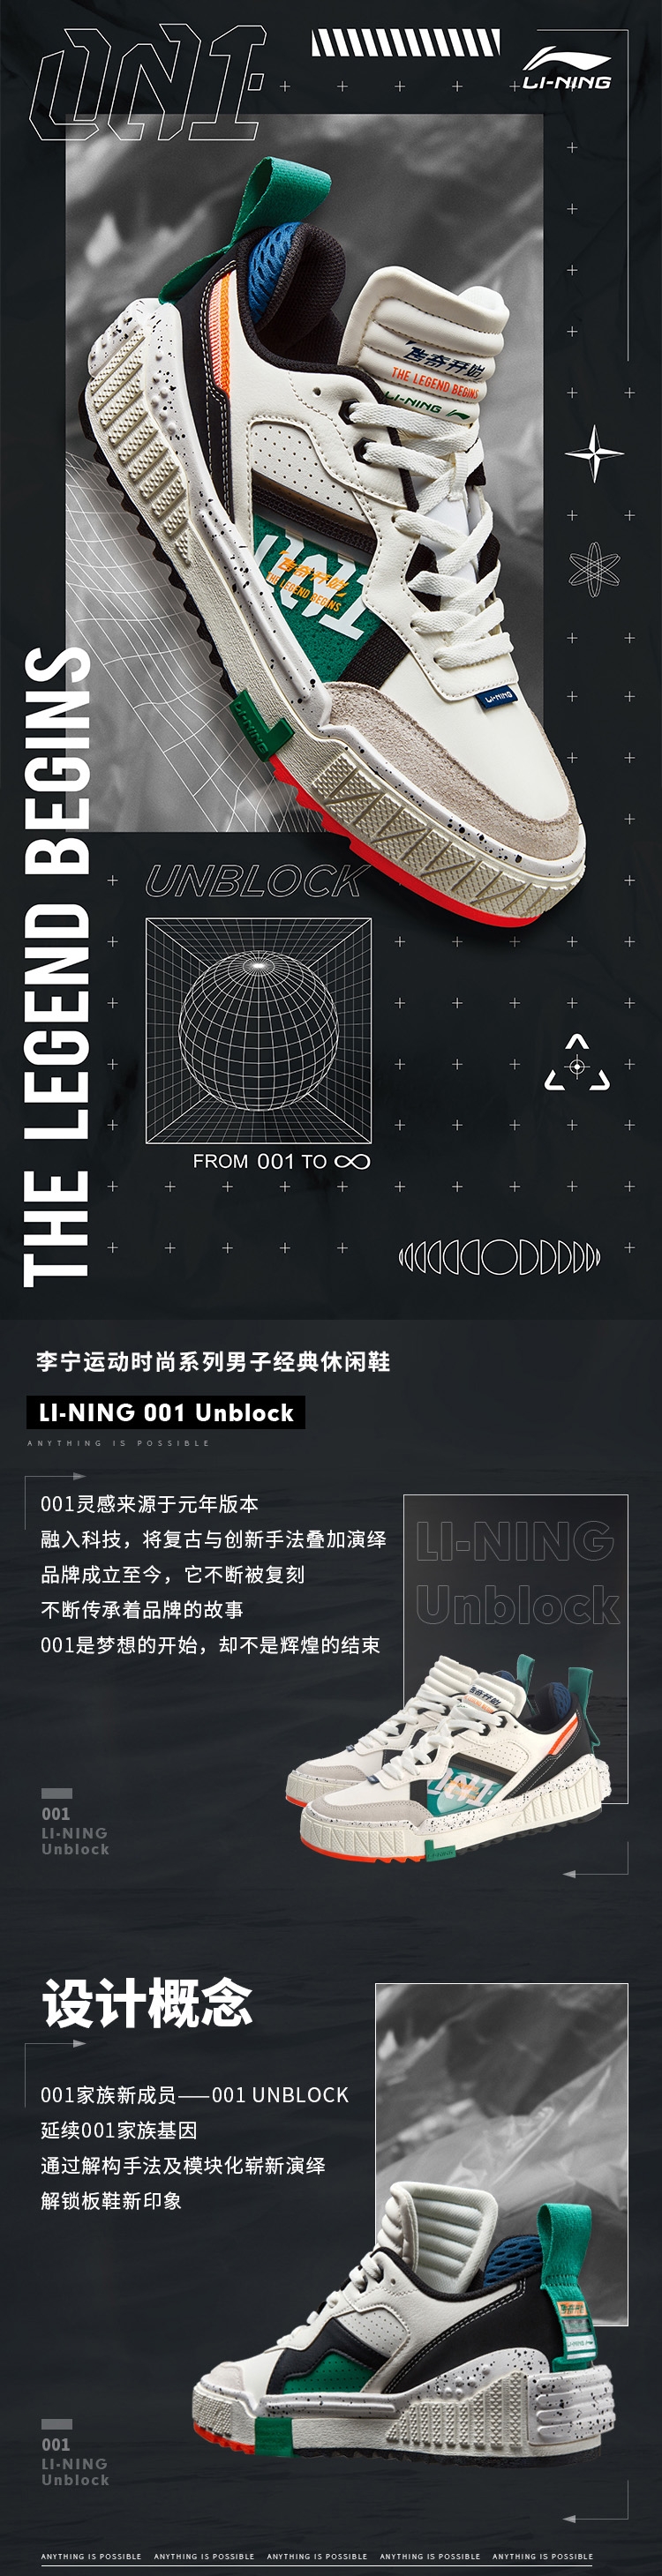 Li-Ning 001 Unblock 'The Legend Begins' Men's Classic Casual Shoes - White/Black/Green